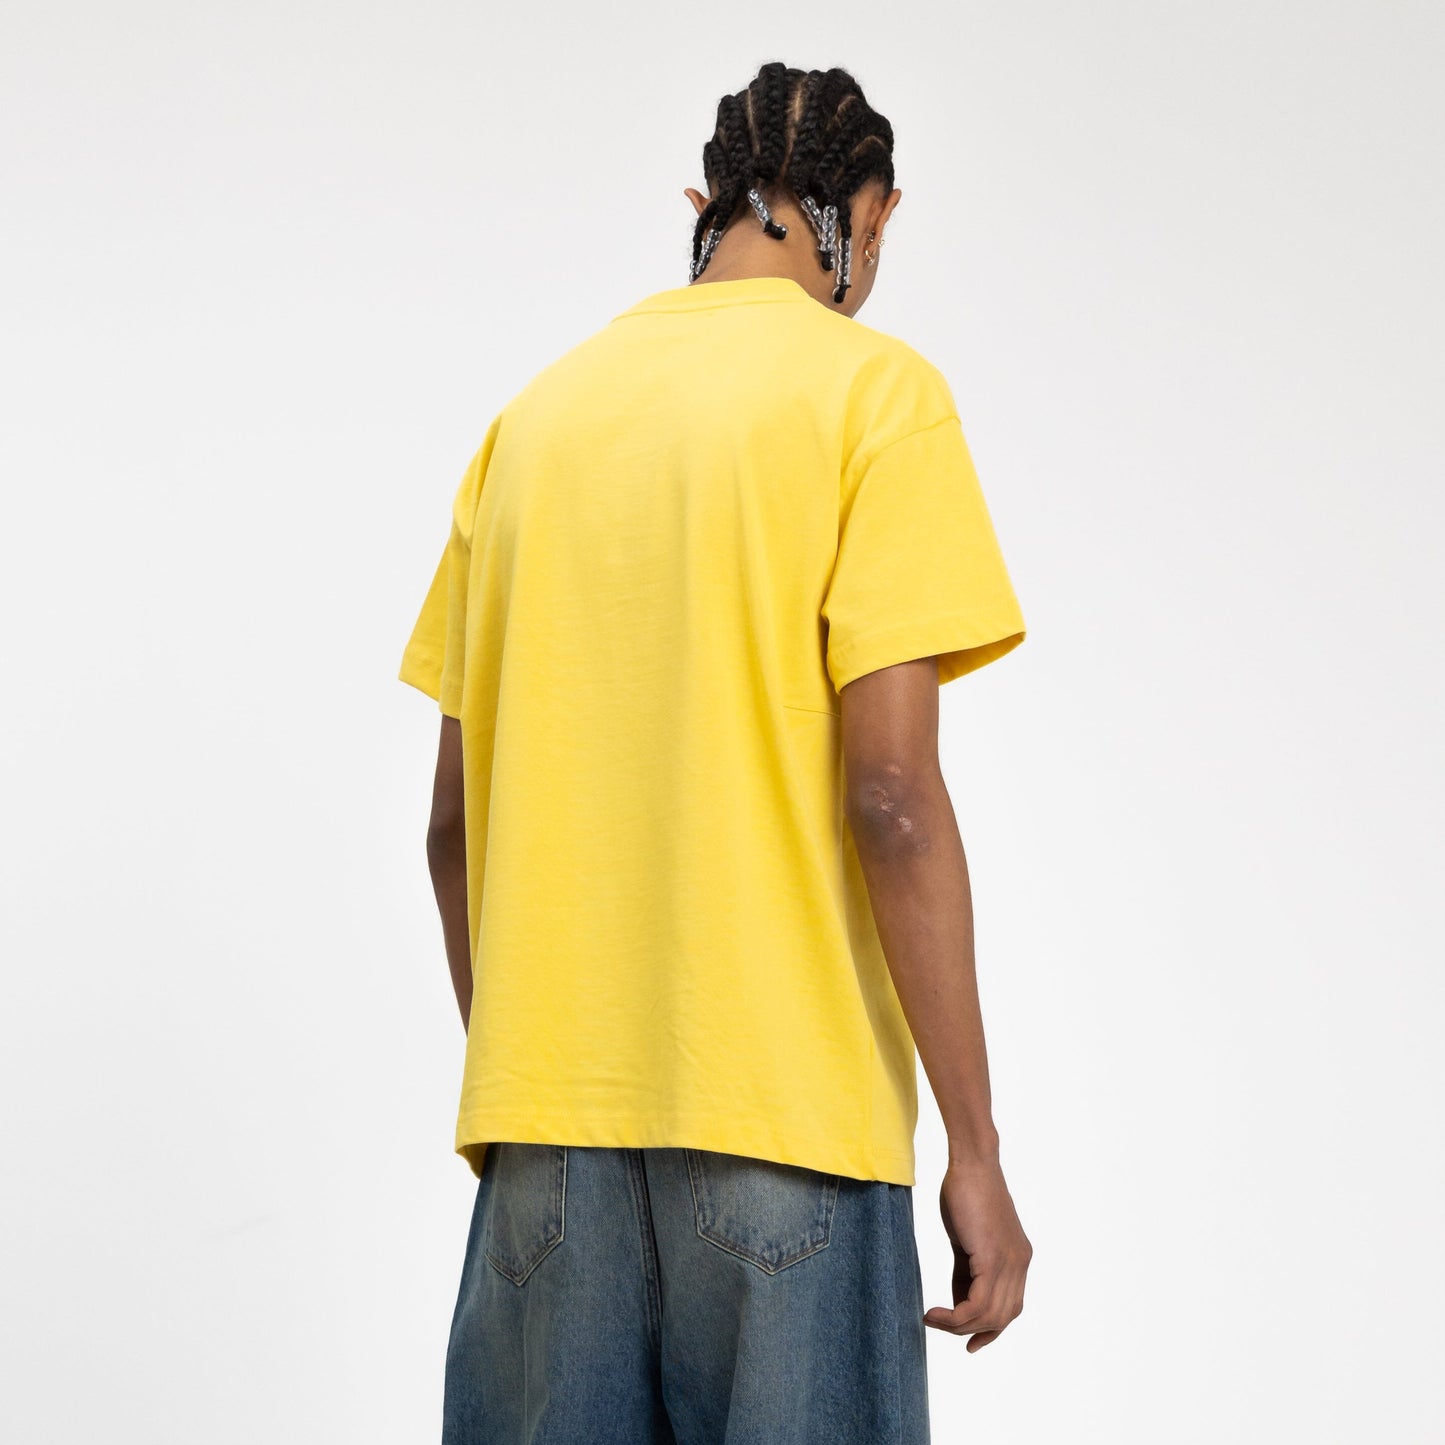 Distorted Printemps-Été T-Shirt in Yellow